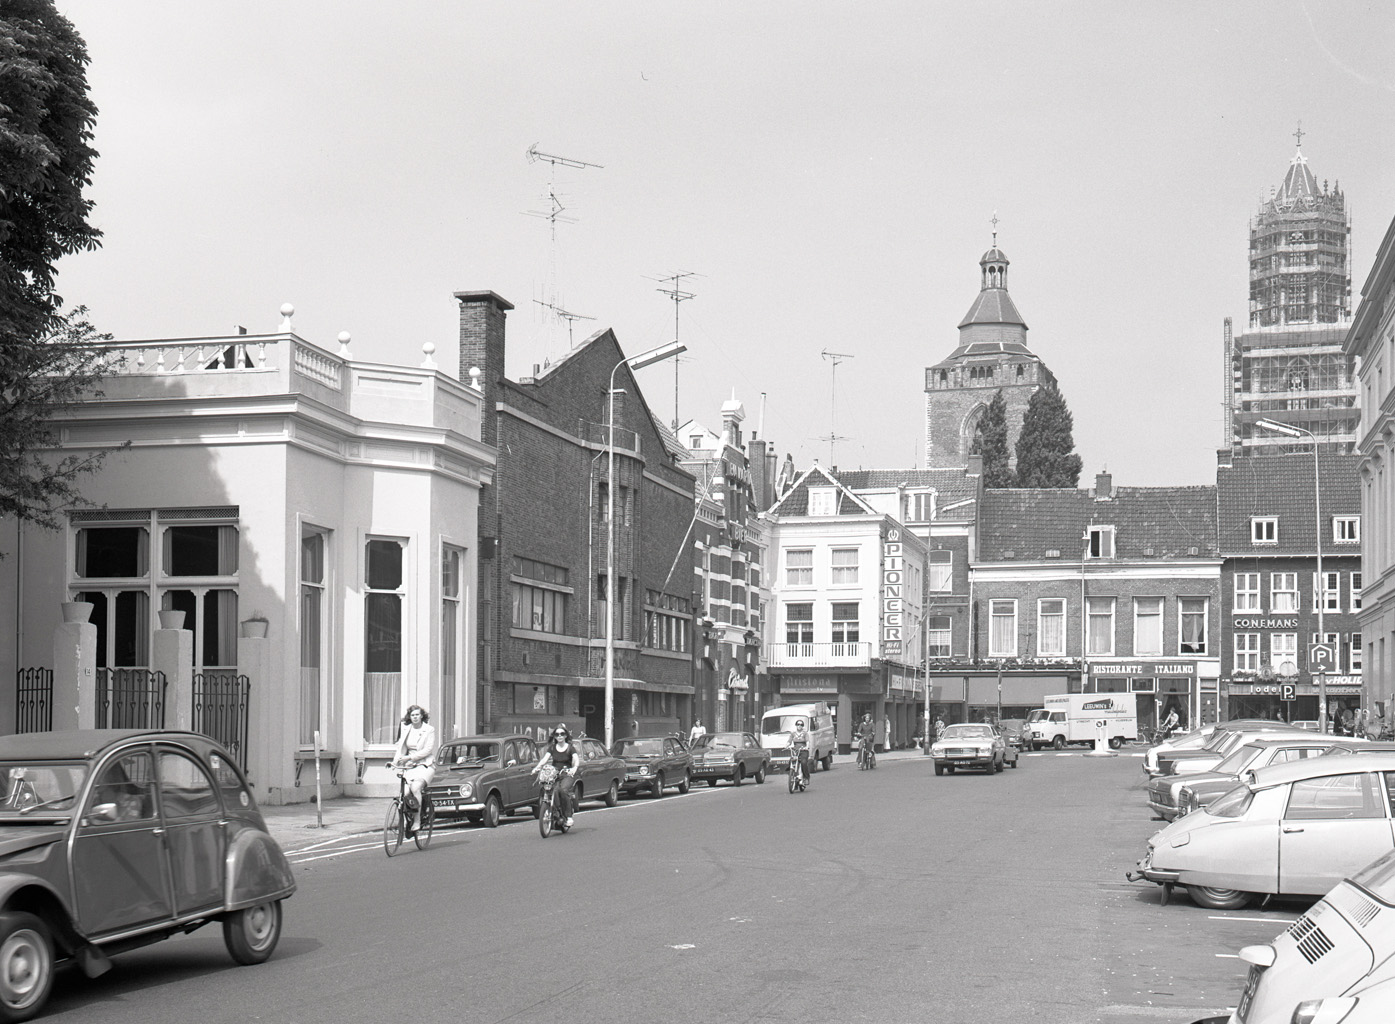 Throwback to 1974 Utrecht